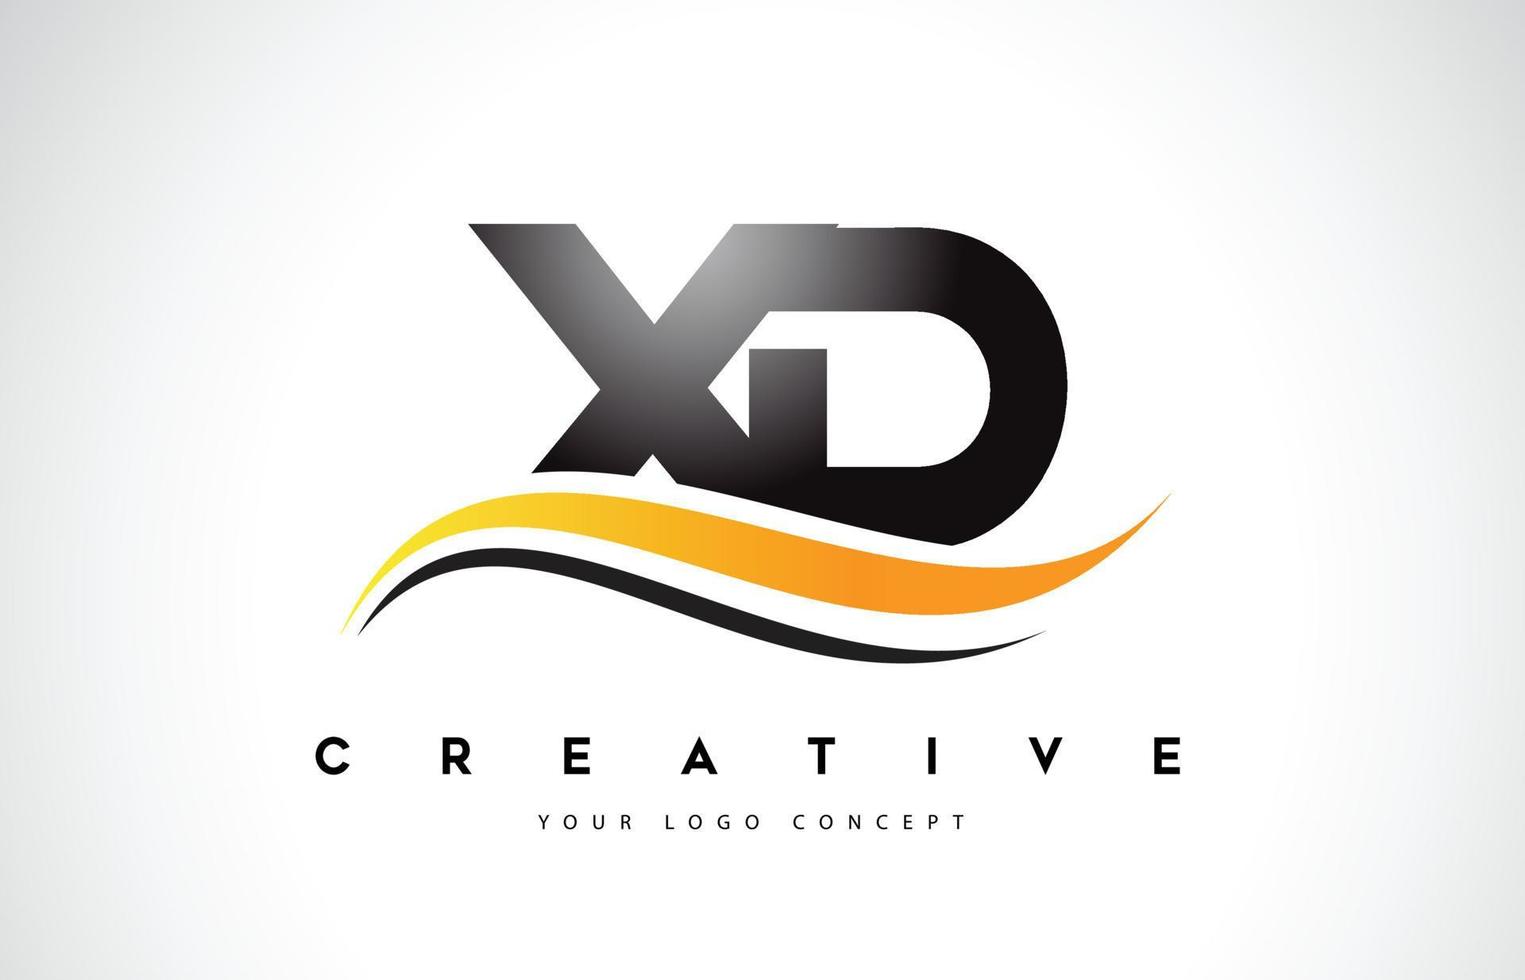 xd xd swoosh letter logo design con moderne linee curve swoosh gialle. vettore